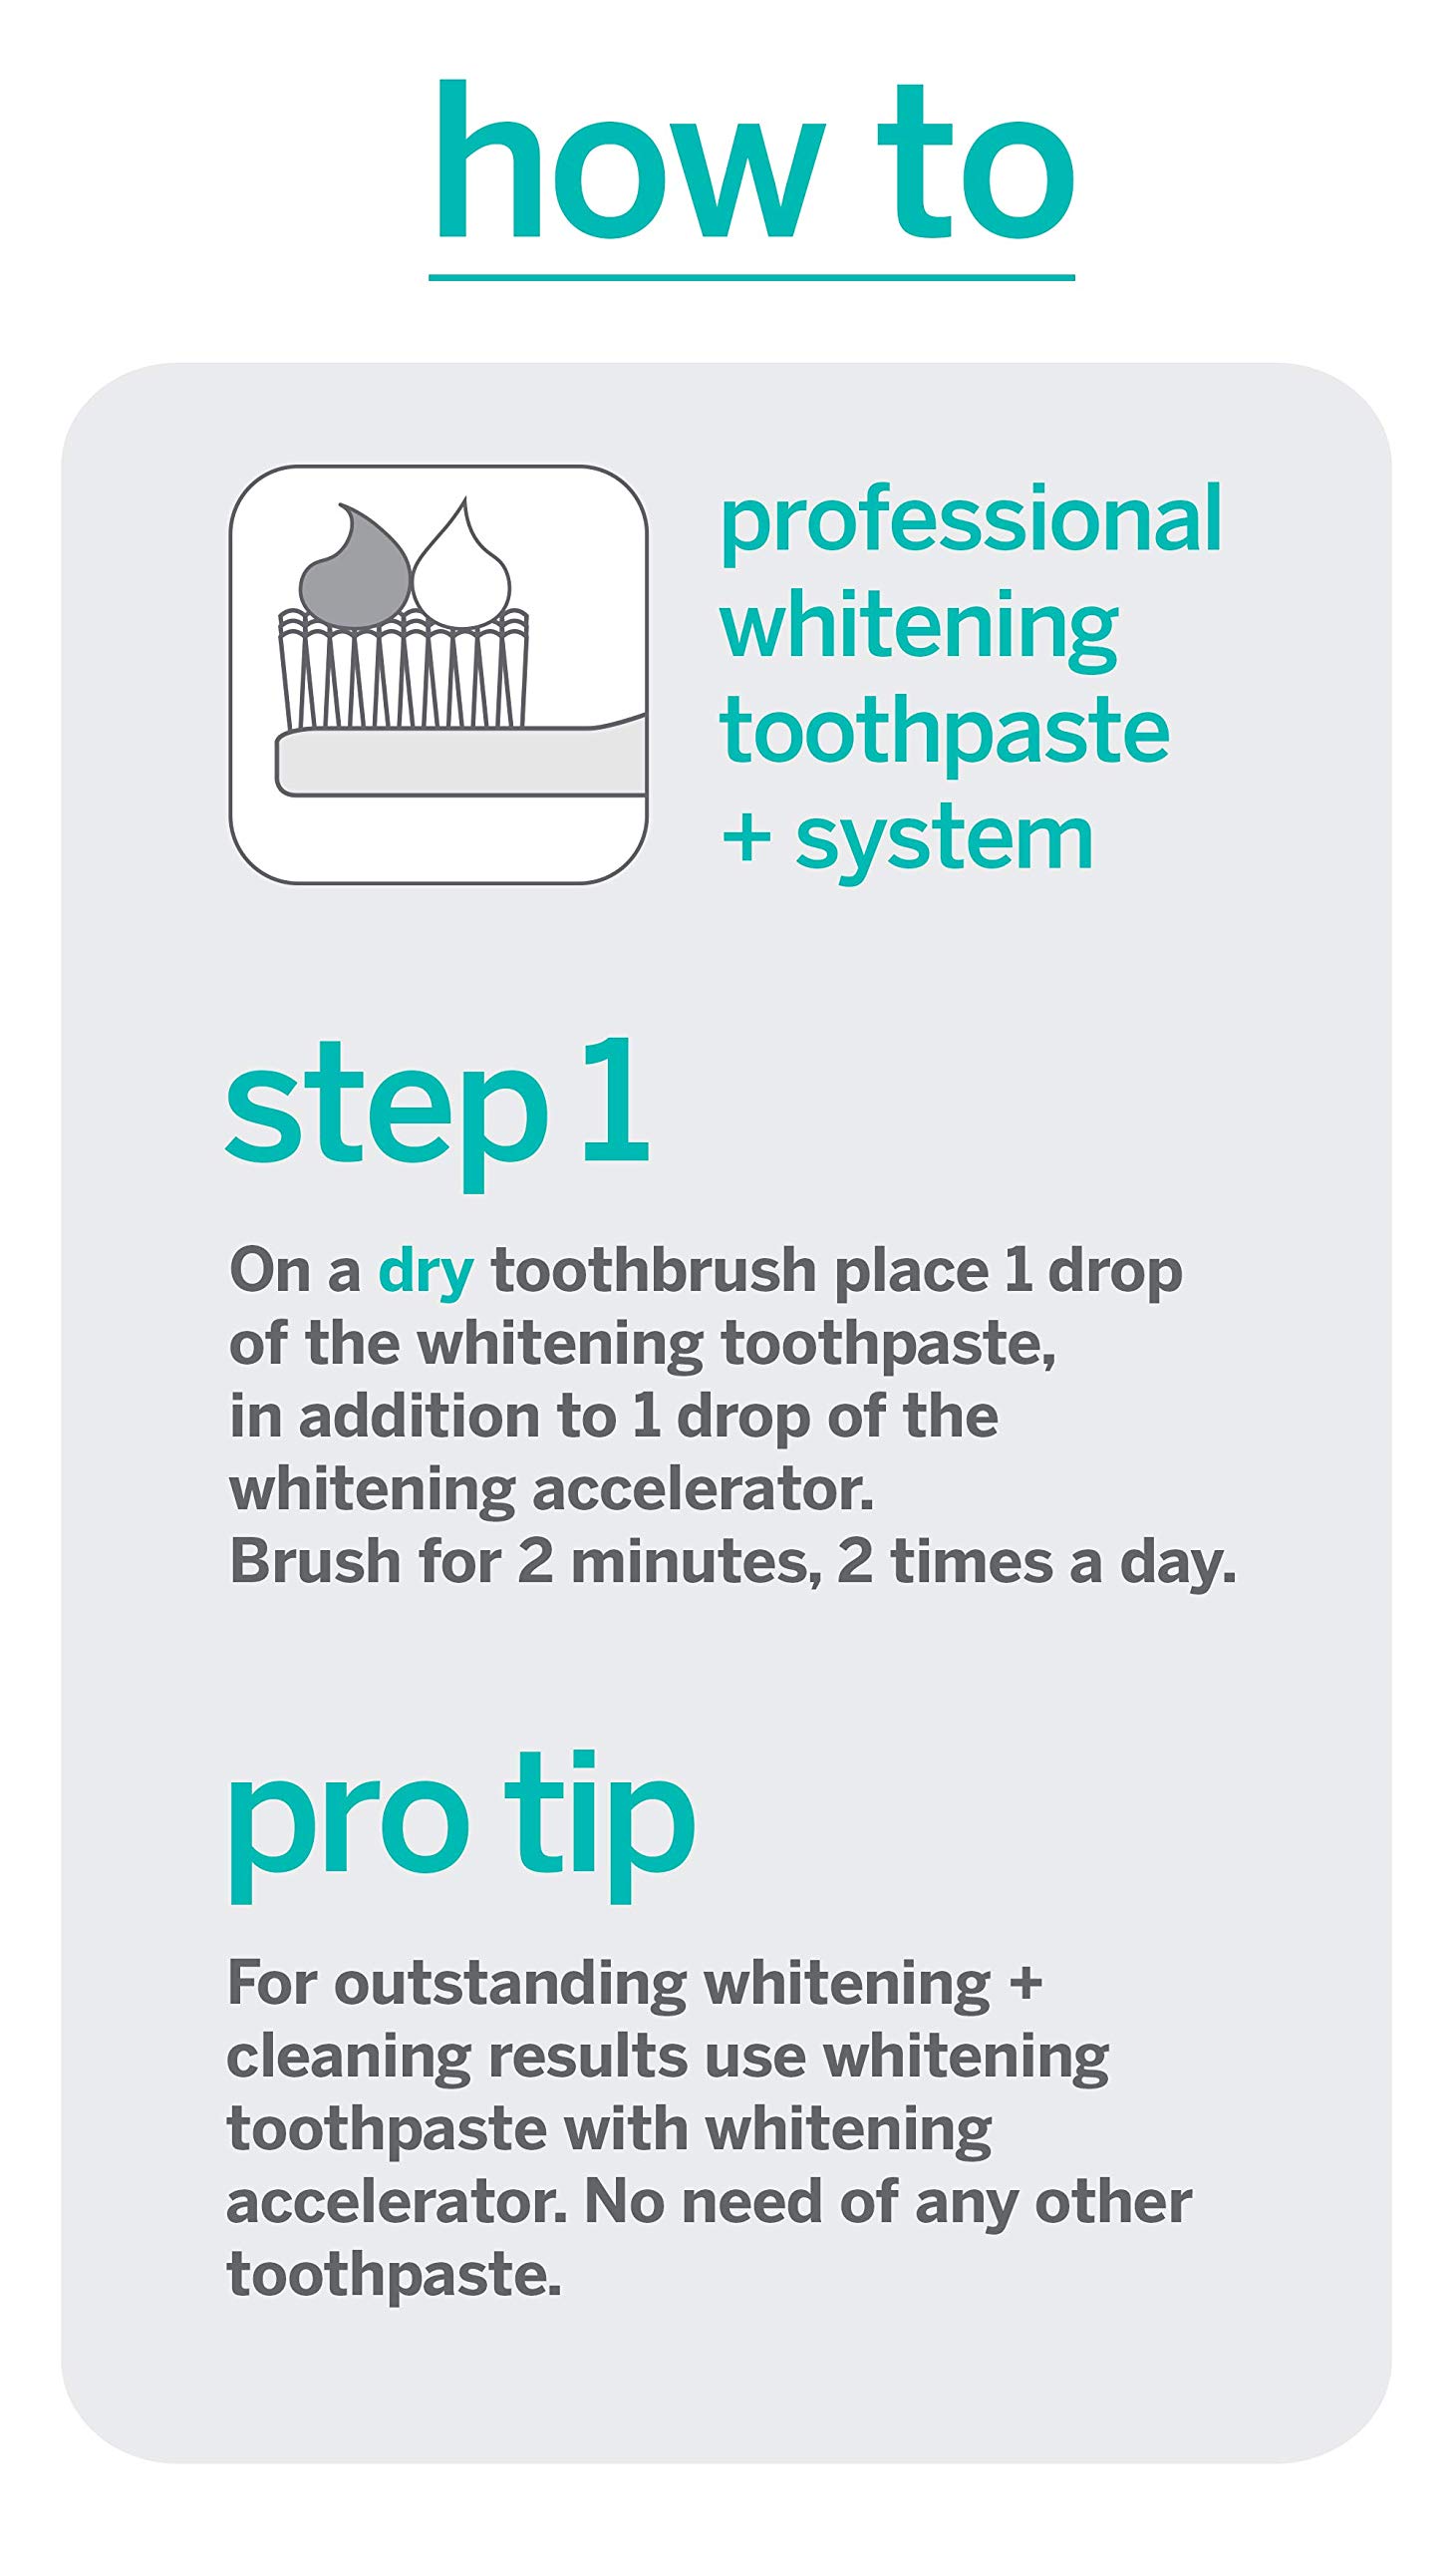 Supersmile Professional Whitening Accelerator - Powerful Whitening without Sensitivity - Safe and Effective on Dental Restorations (8 oz)